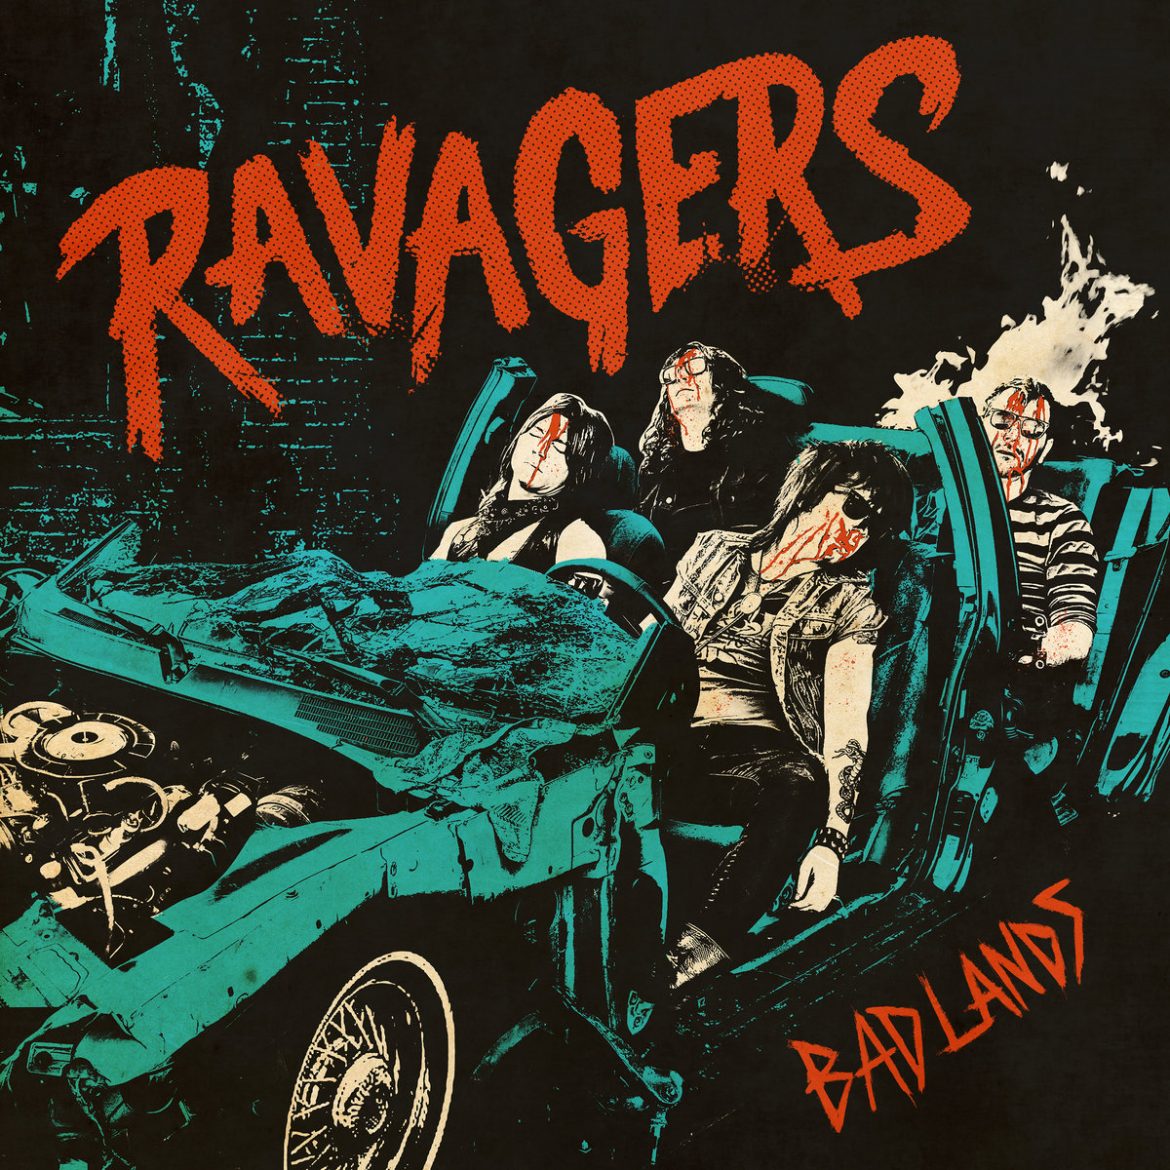 Ravagers "Badlands"